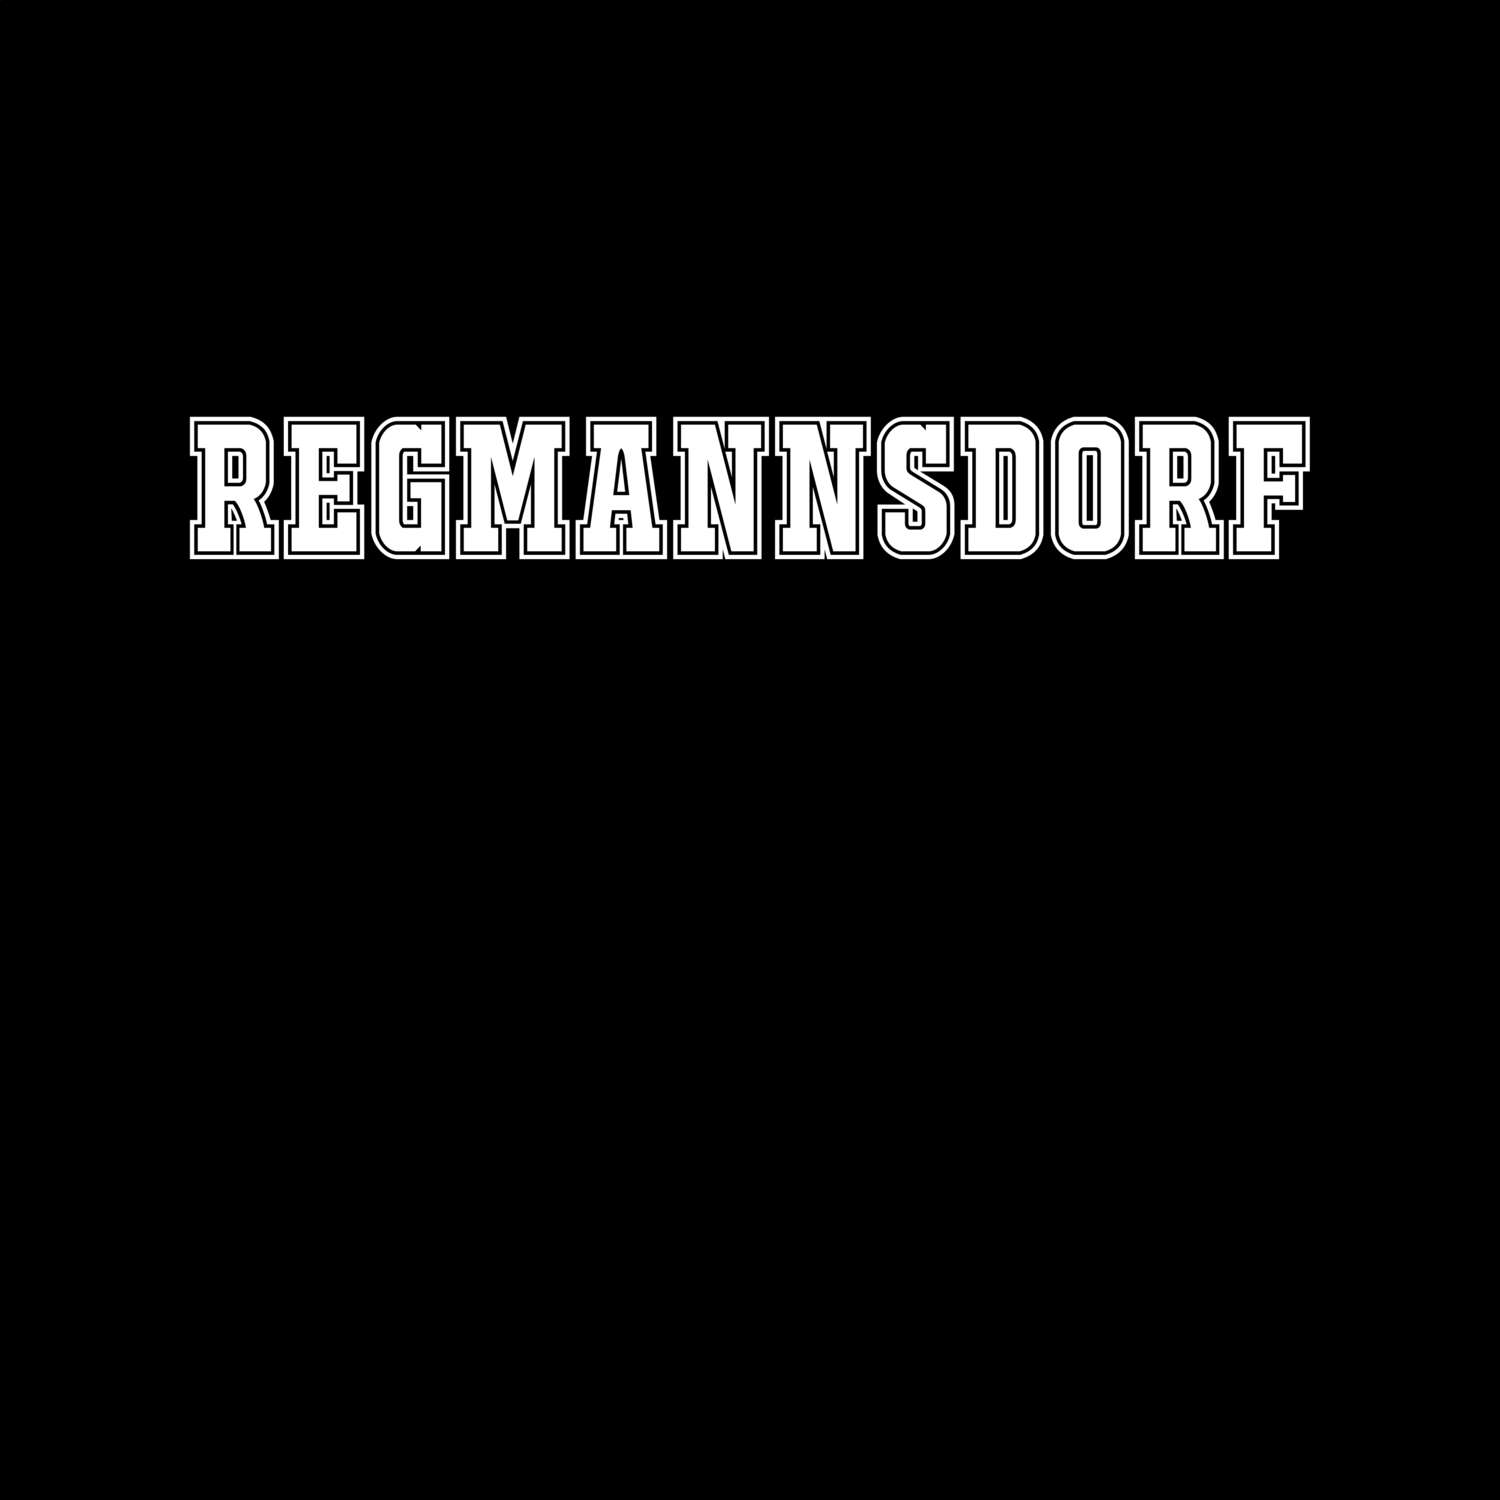 Regmannsdorf T-Shirt »Classic«